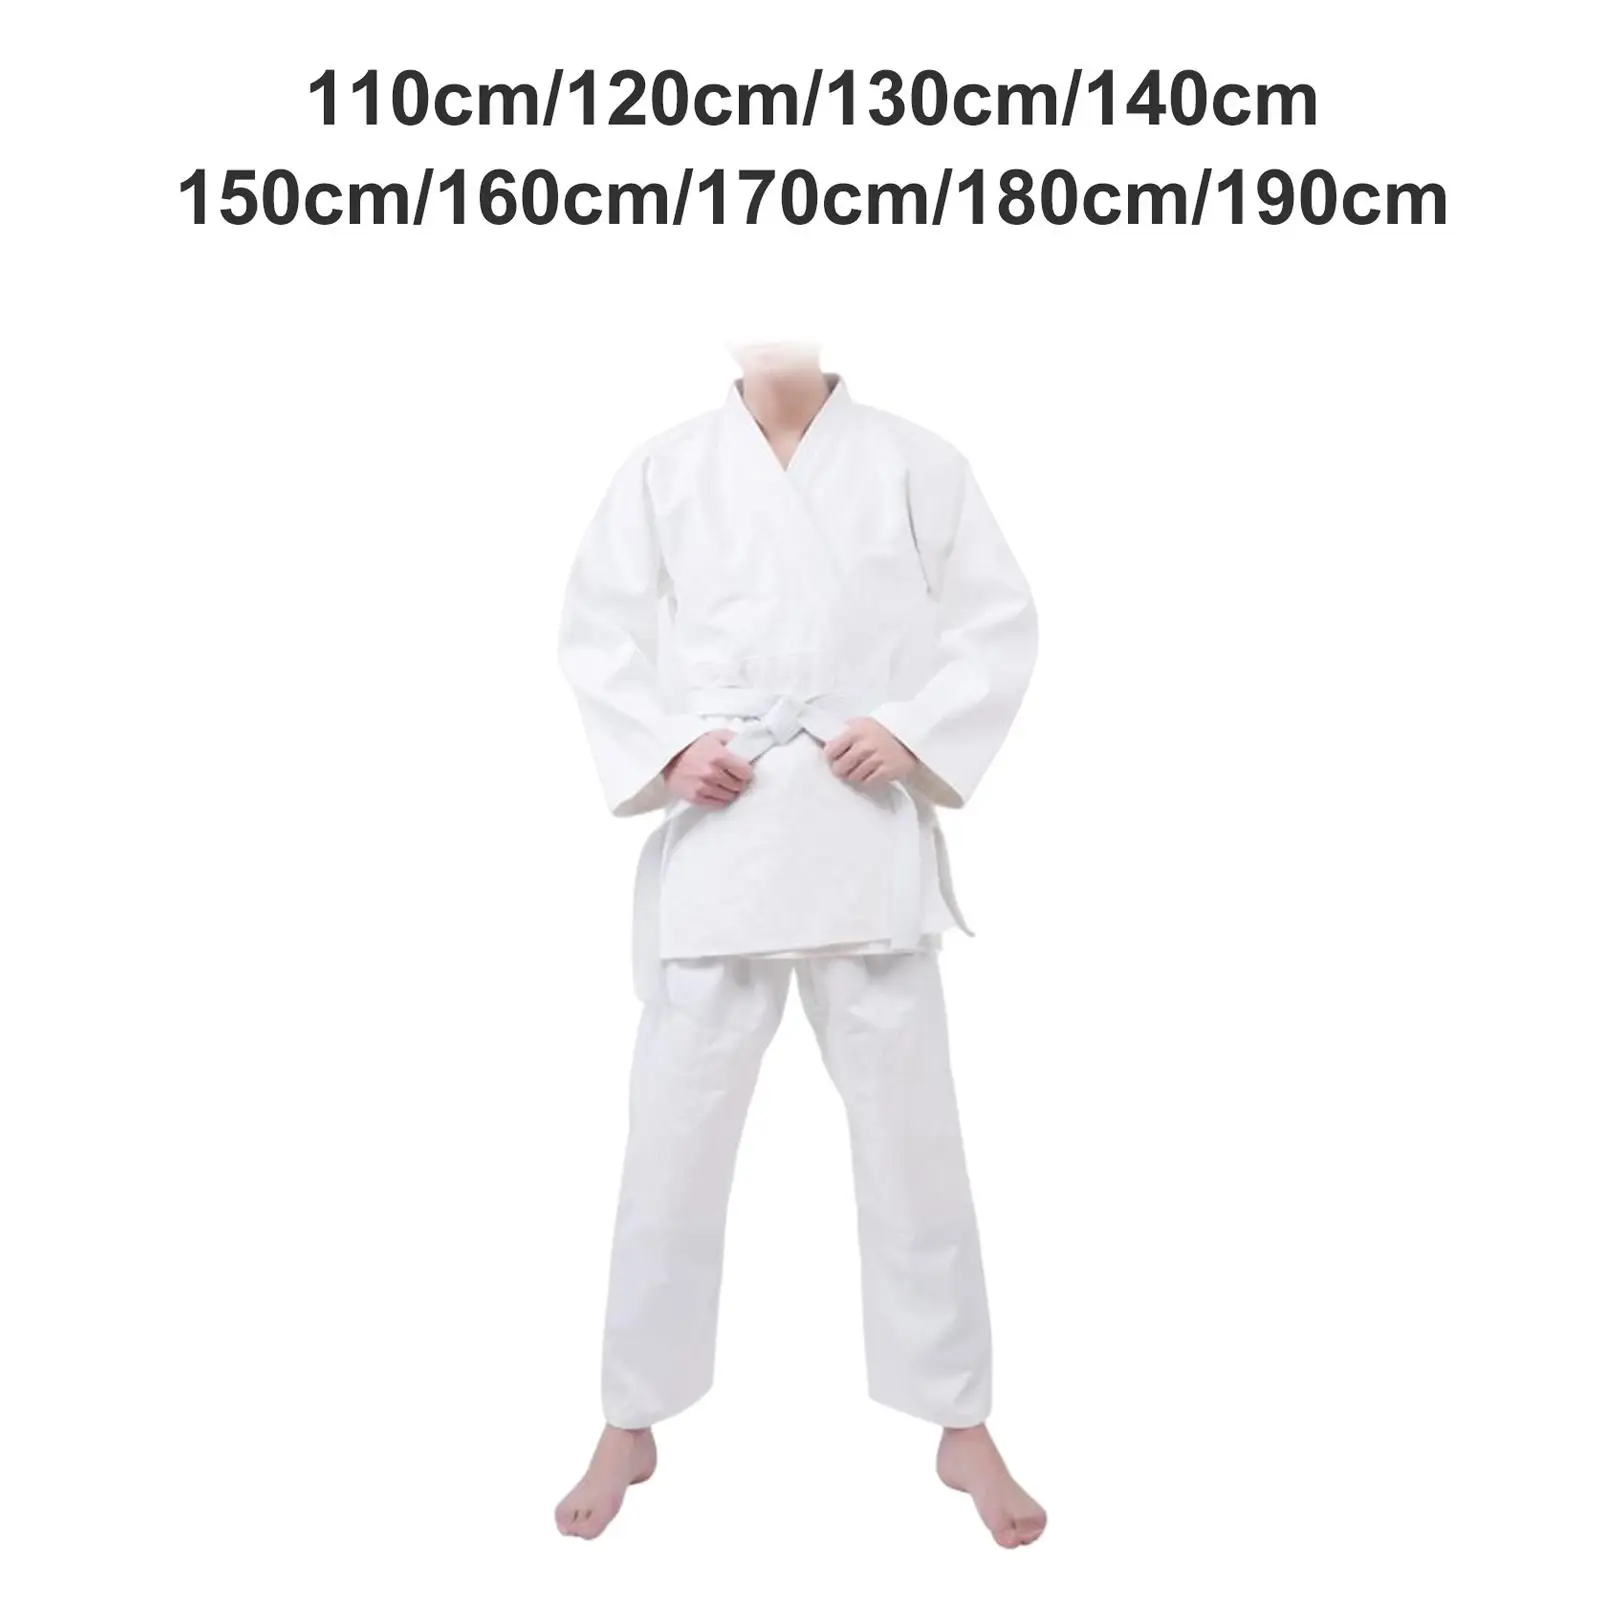 Traditional Judo Gi Uniform Long Sleeve Clothing Costume White Belt Performance for Women Adults Children Beginners Training